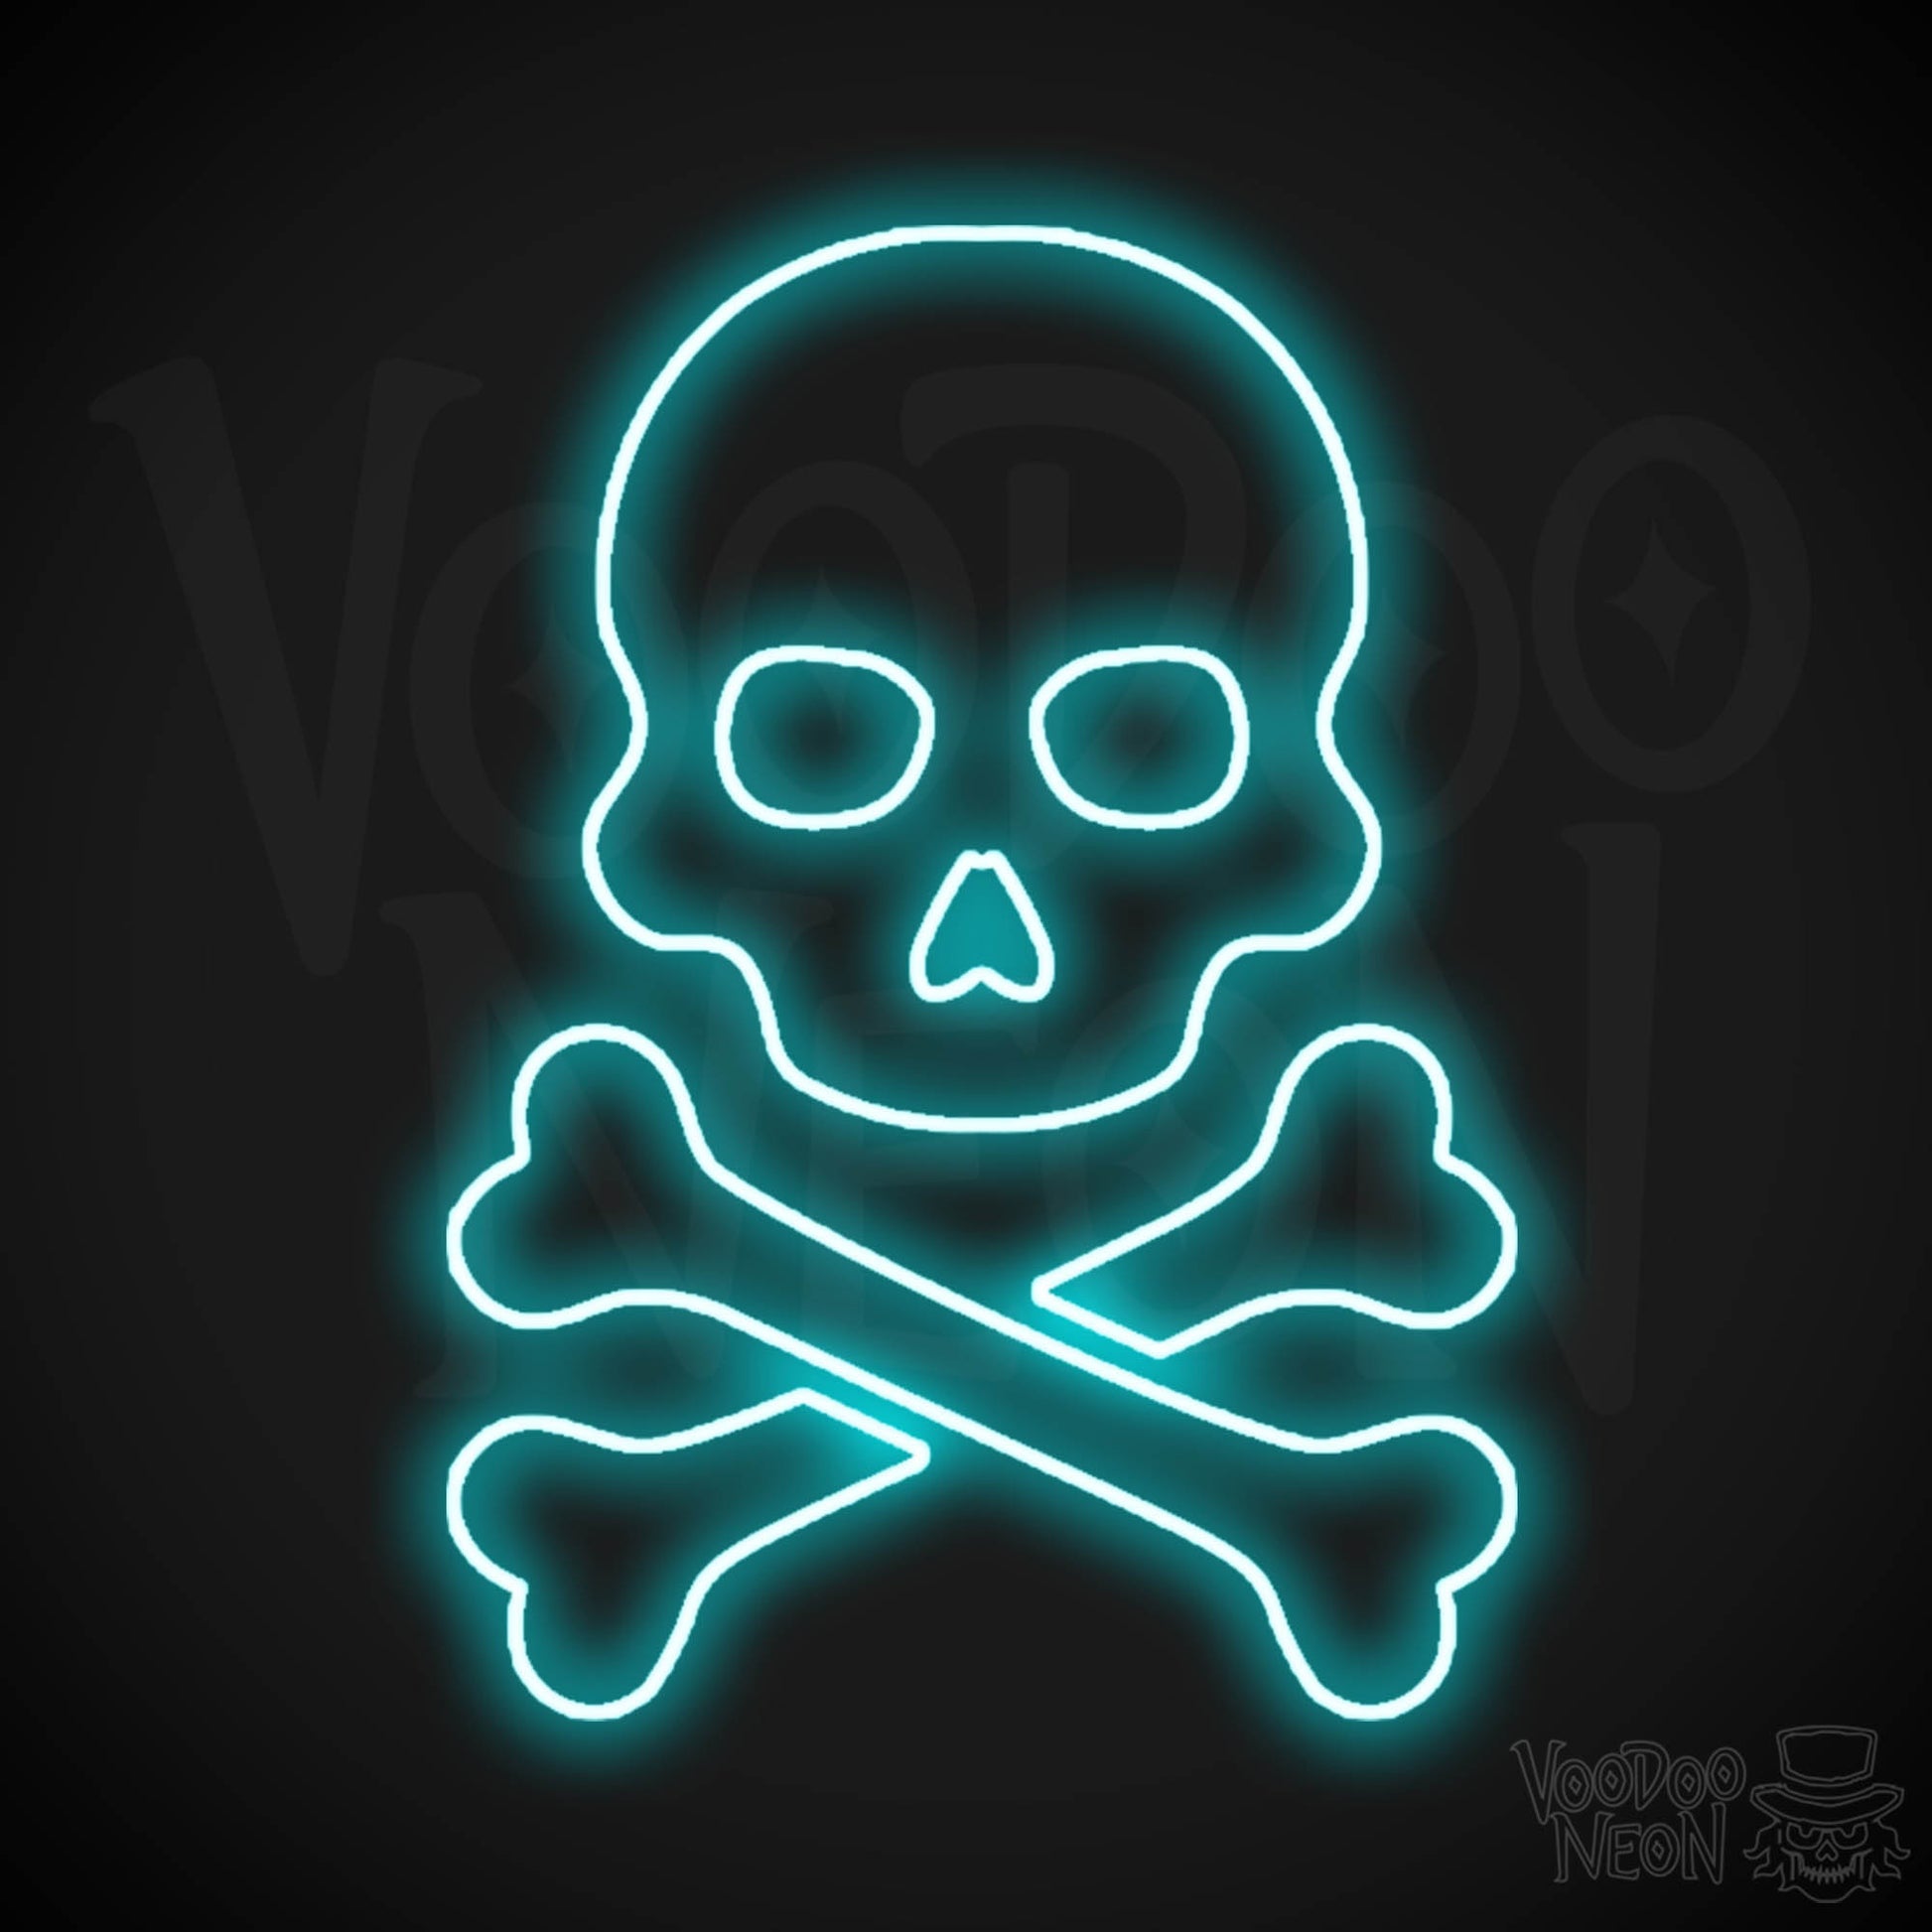 Pirate Skull & Crossbones Neon Sign - Neon Pirate Skull & Crossbones Sign - LED Lights - Color Ice Blue